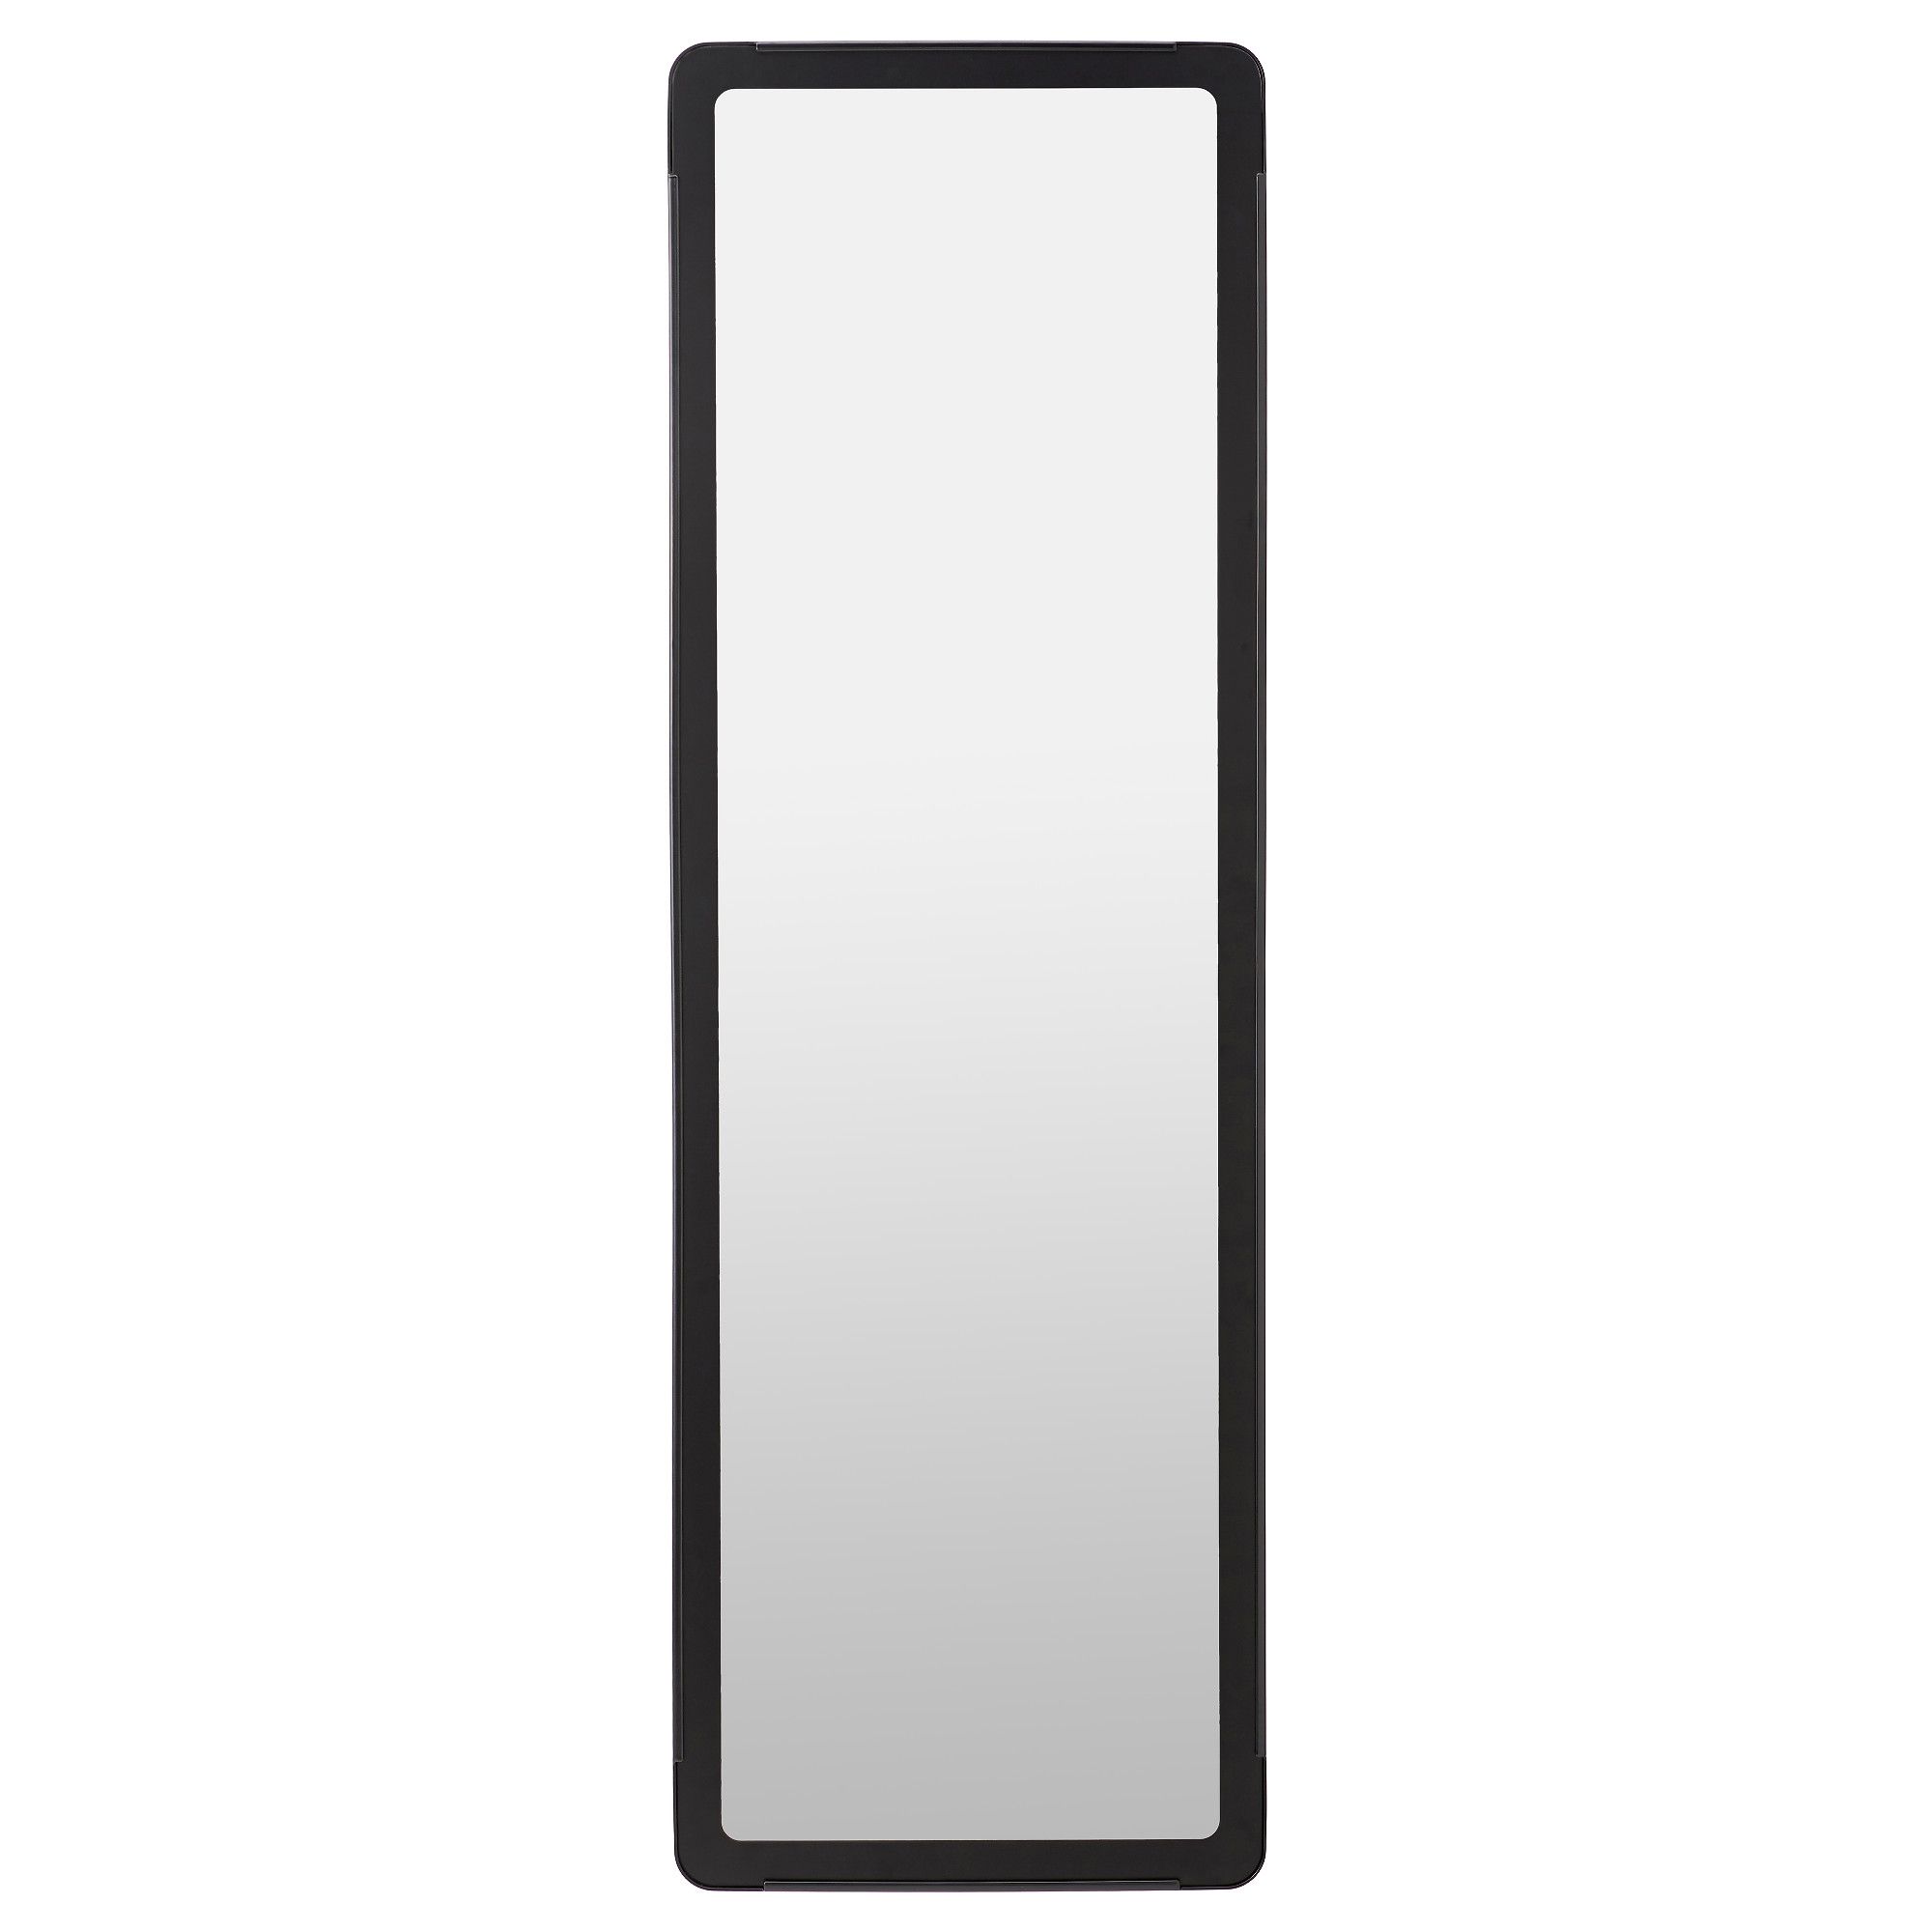 Mirrors Ikea Regarding Long Narrow Mirrors For Sale (View 11 of 15)